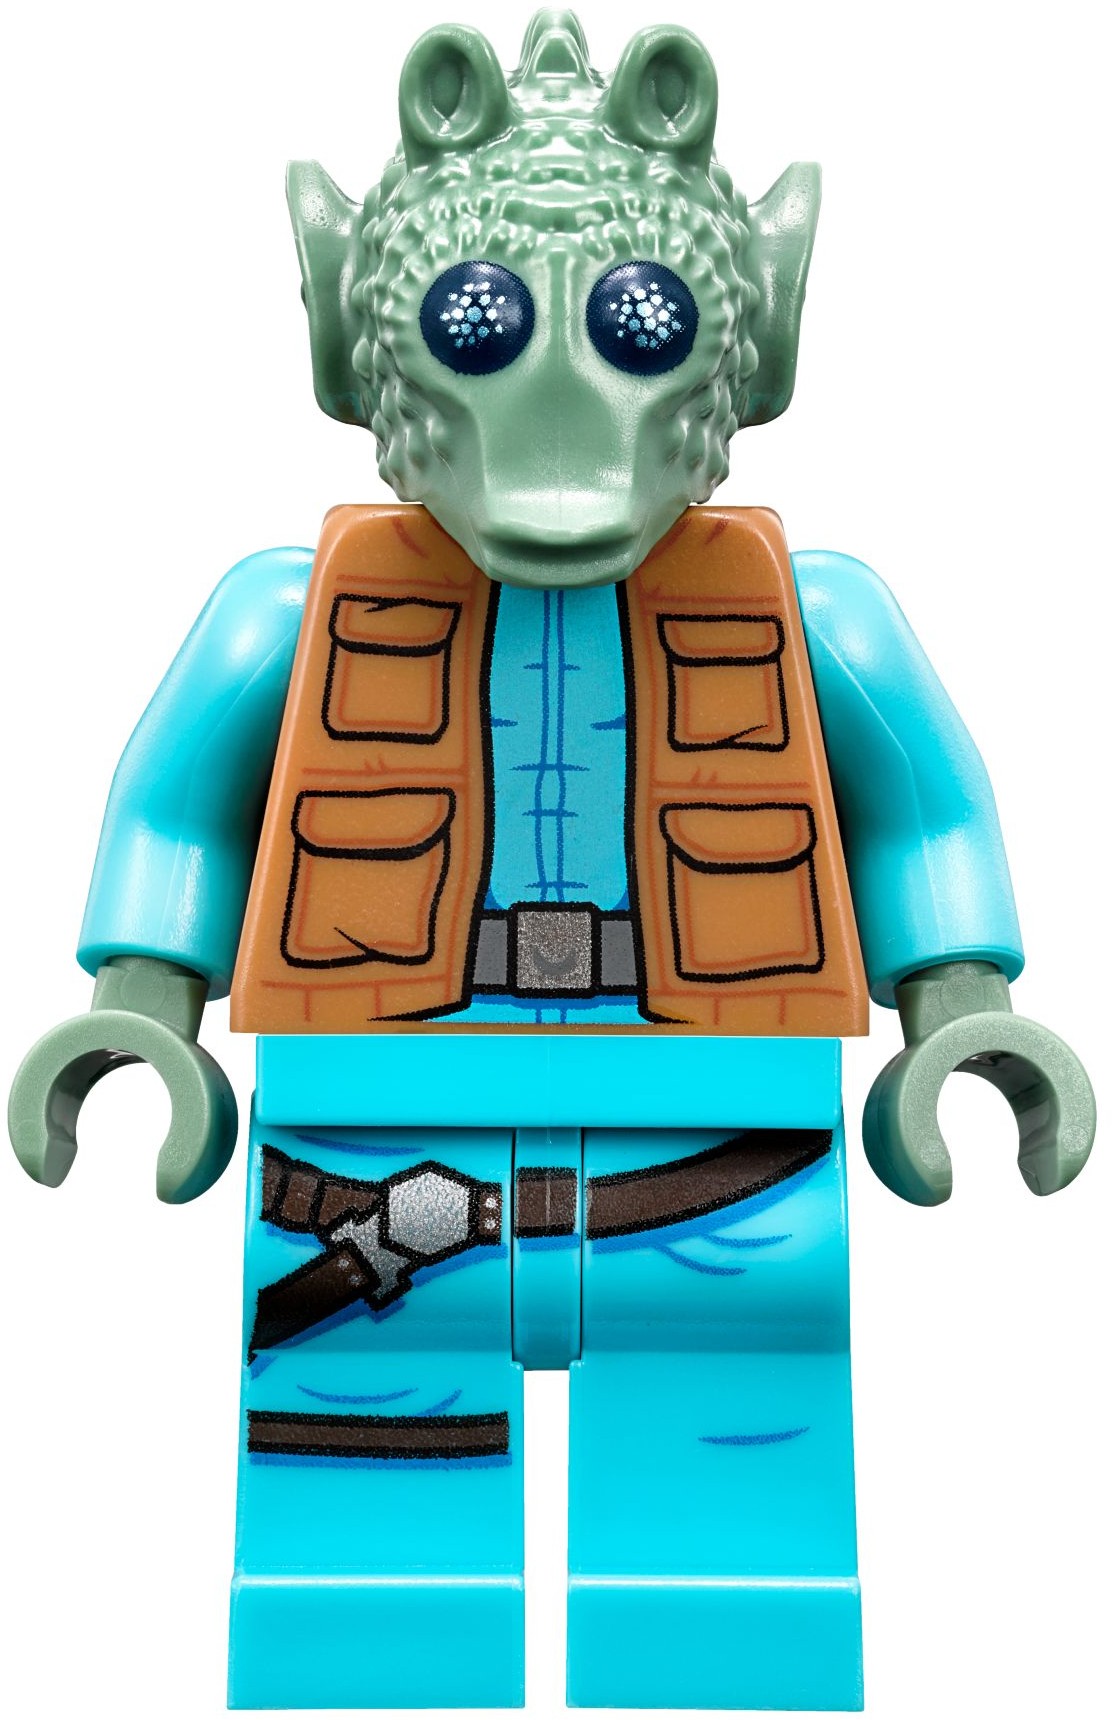 LEGO Star Wars 2004 Greedo Minifigure 